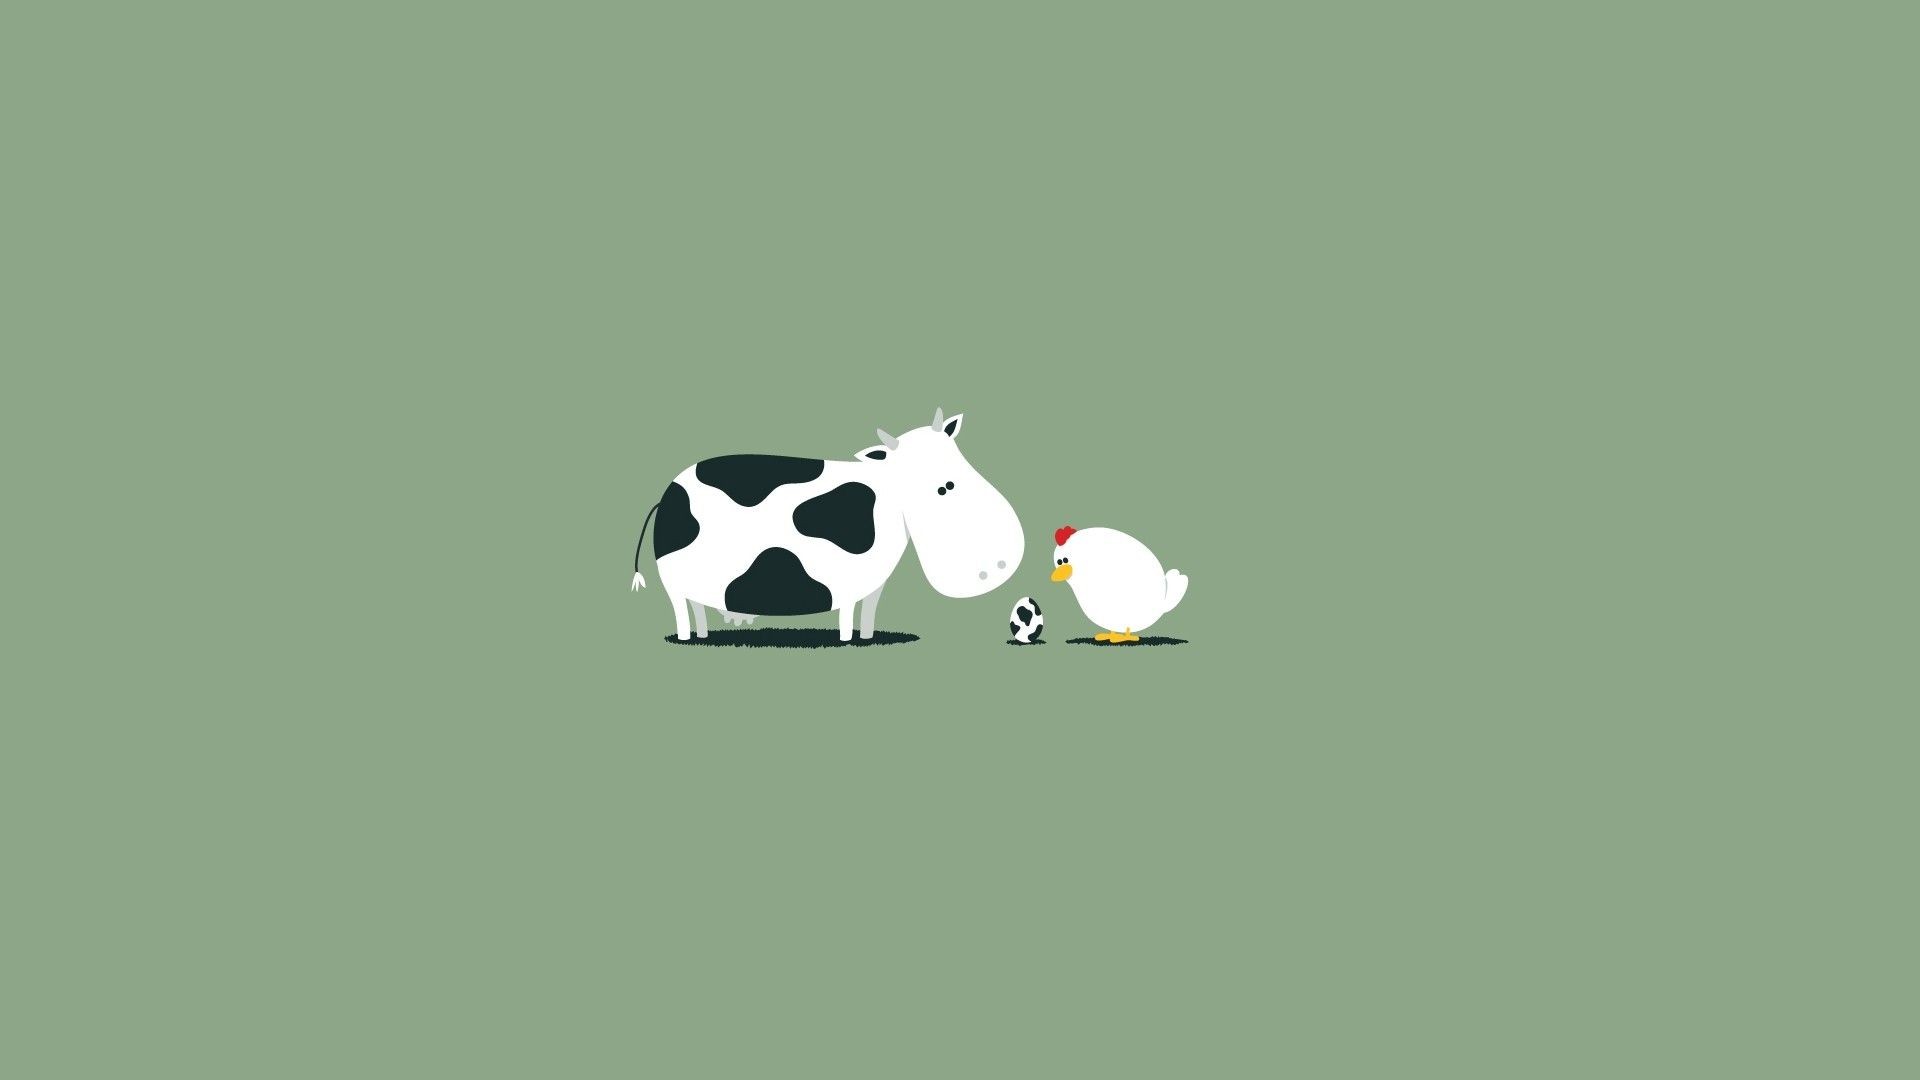 General 1920x1080 animals minimalism humor cow eggs simple background artwork birds mammals